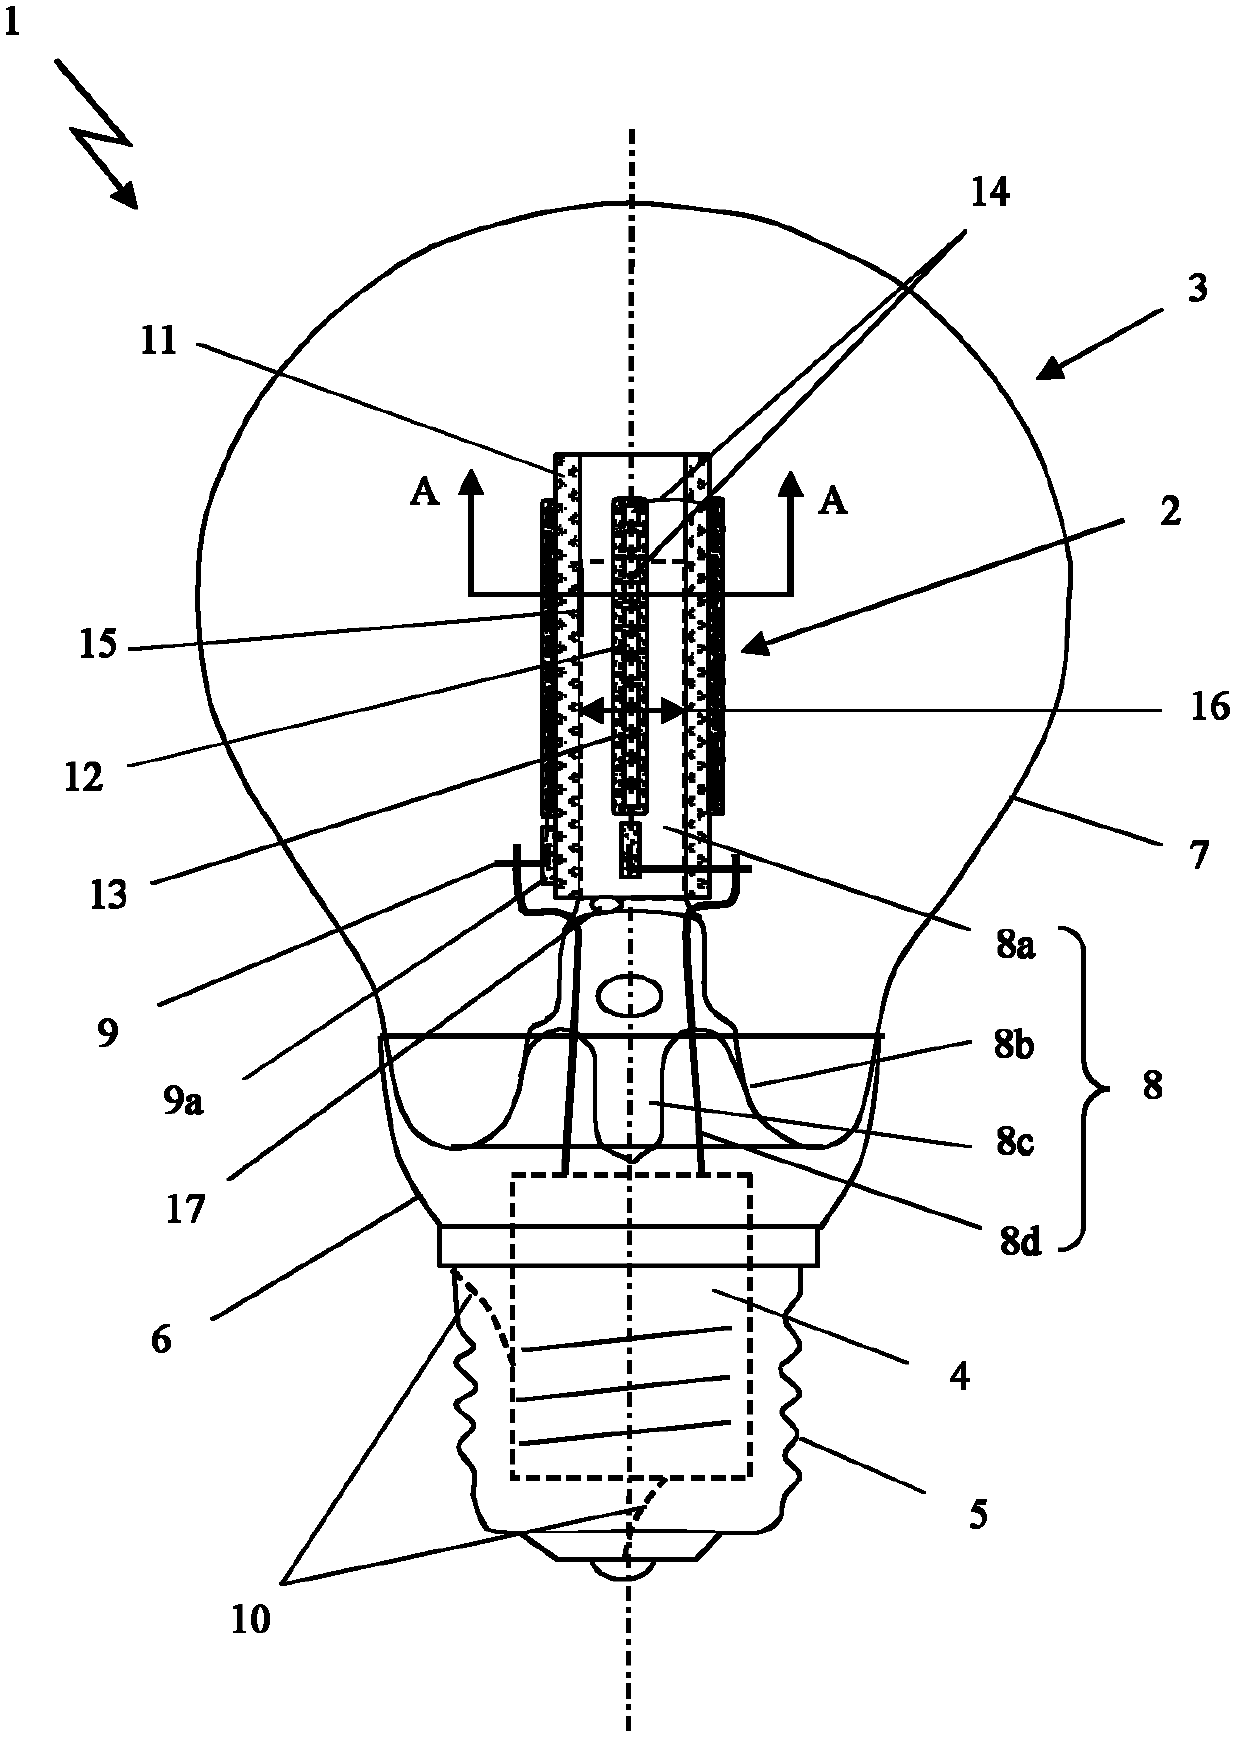 Light-emitting diode (LED) bulb